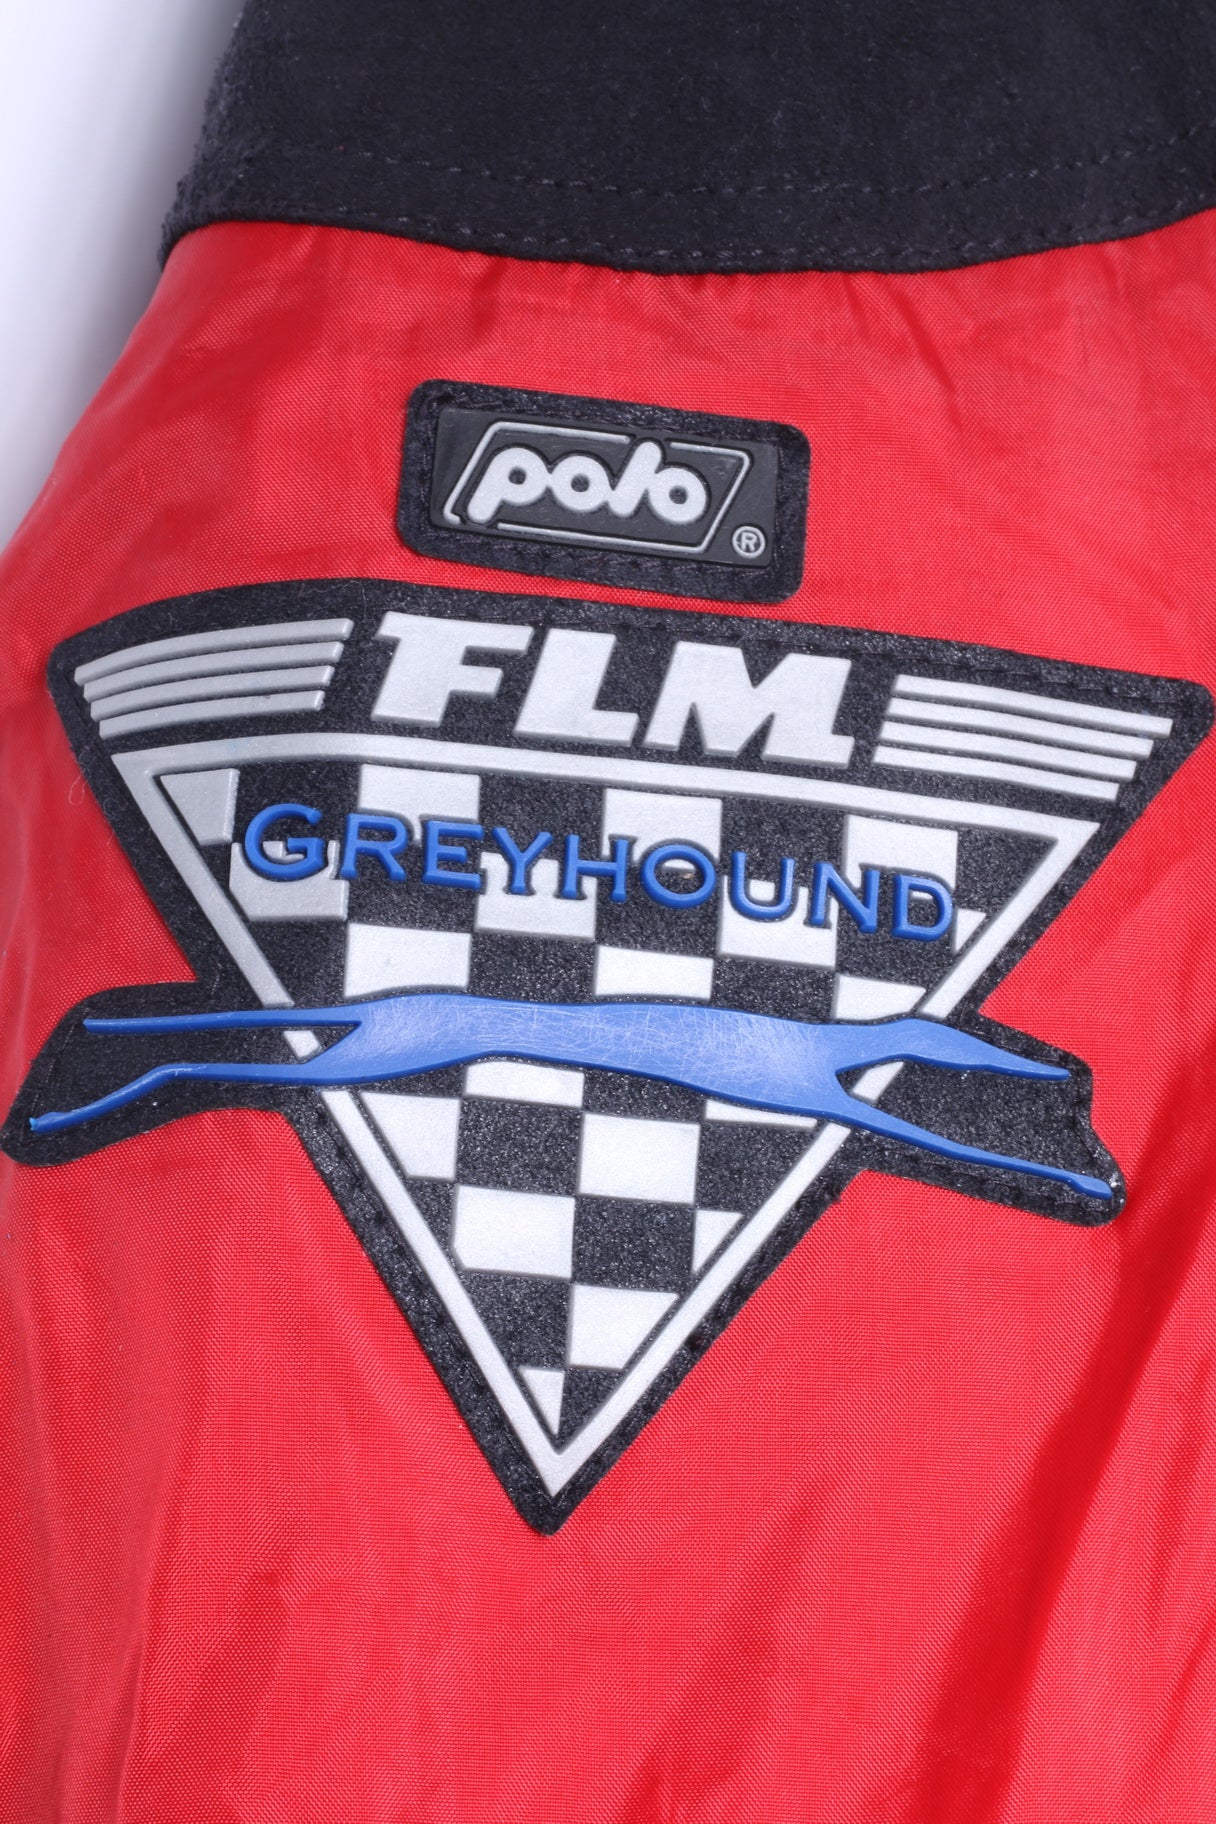 FLM Polo Mens L Racing Jacket Black Greyhound Motocycle Textile Top